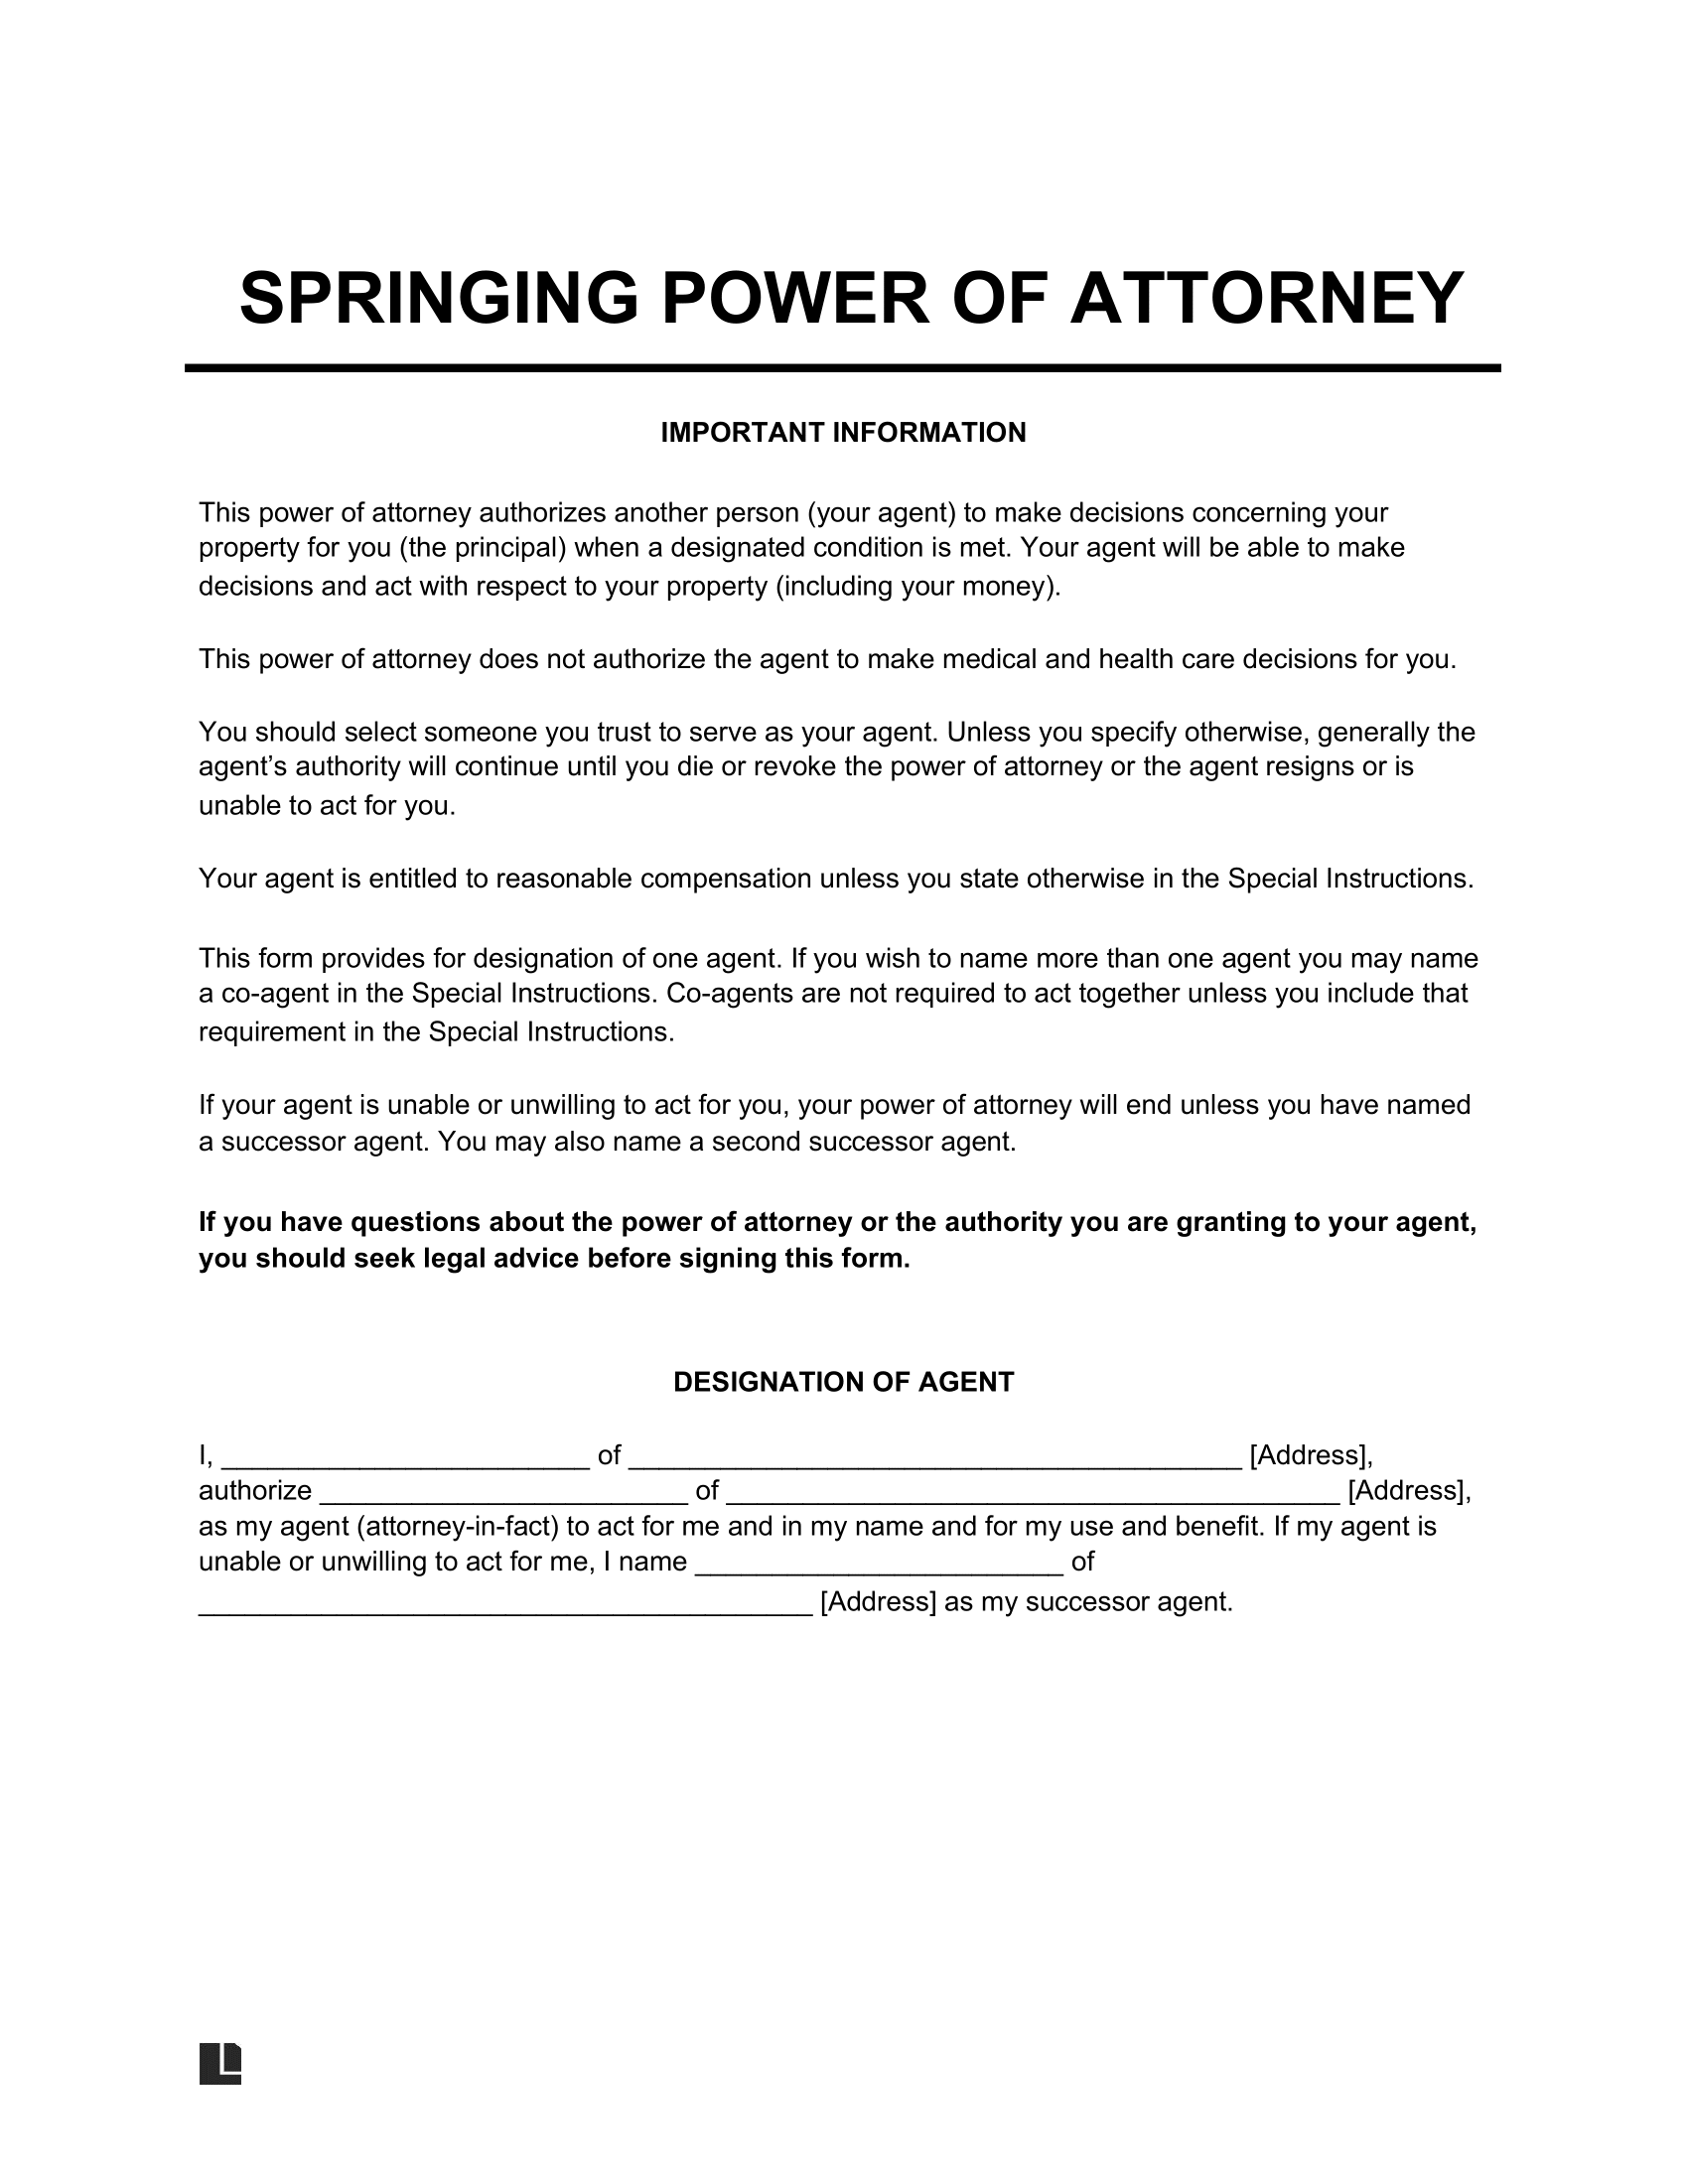 Springing Power of Attorney Form